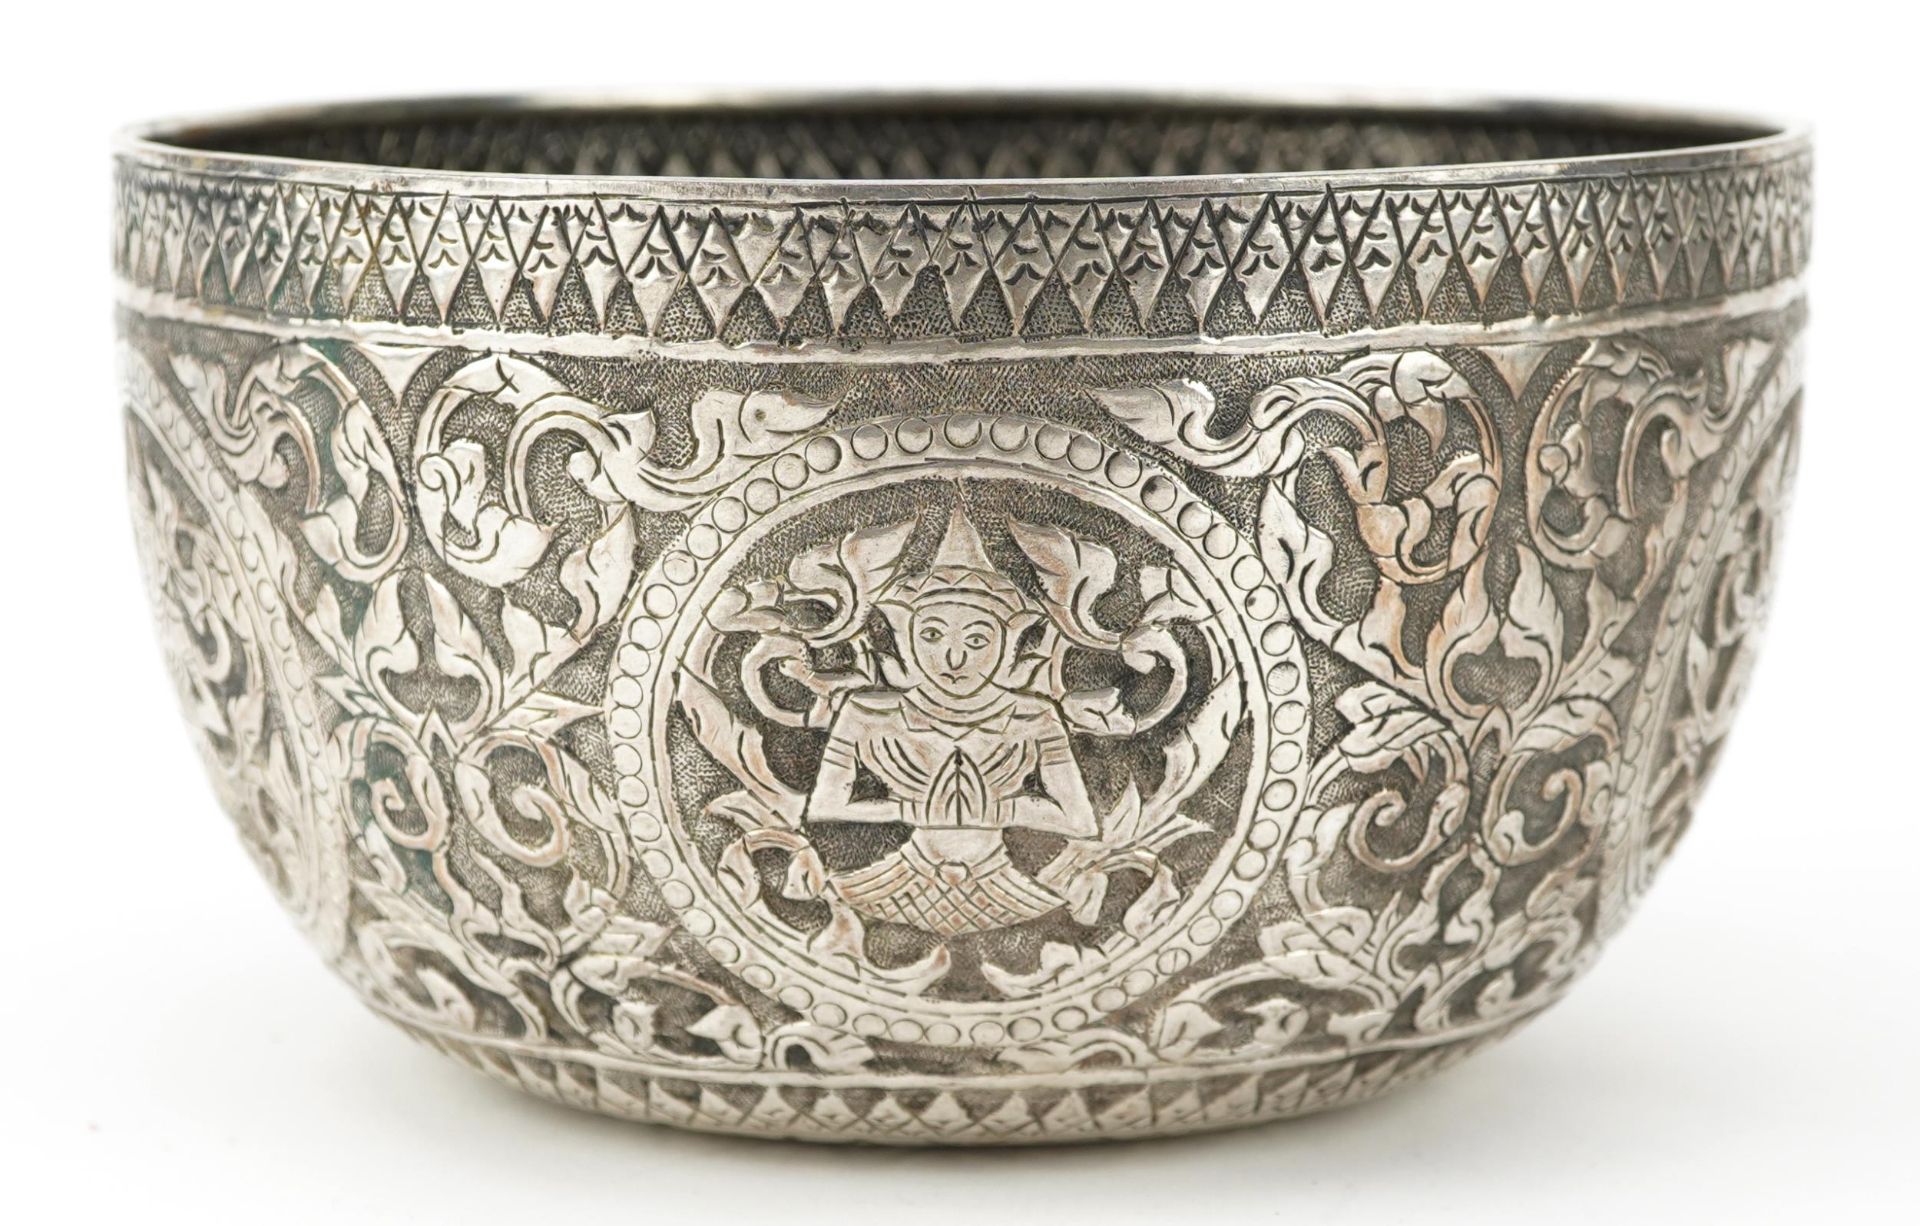 Tibetan white metal bowl embossed with deities, 15.5cm in diameter, 171.0g - Image 2 of 6